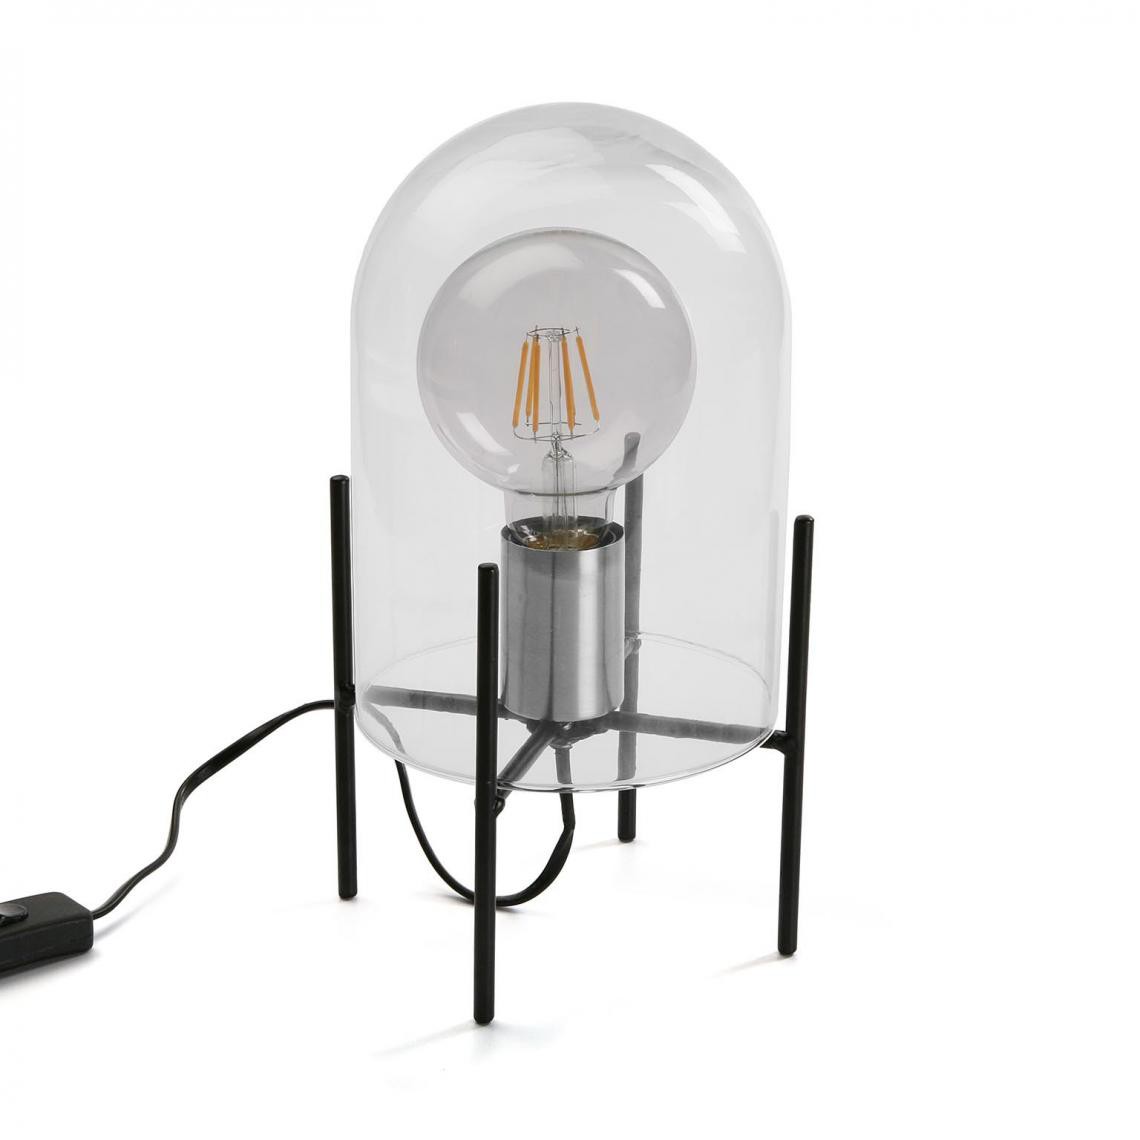 3S. x Home - Lampe à Poser Design JAEN - Lampes à poser